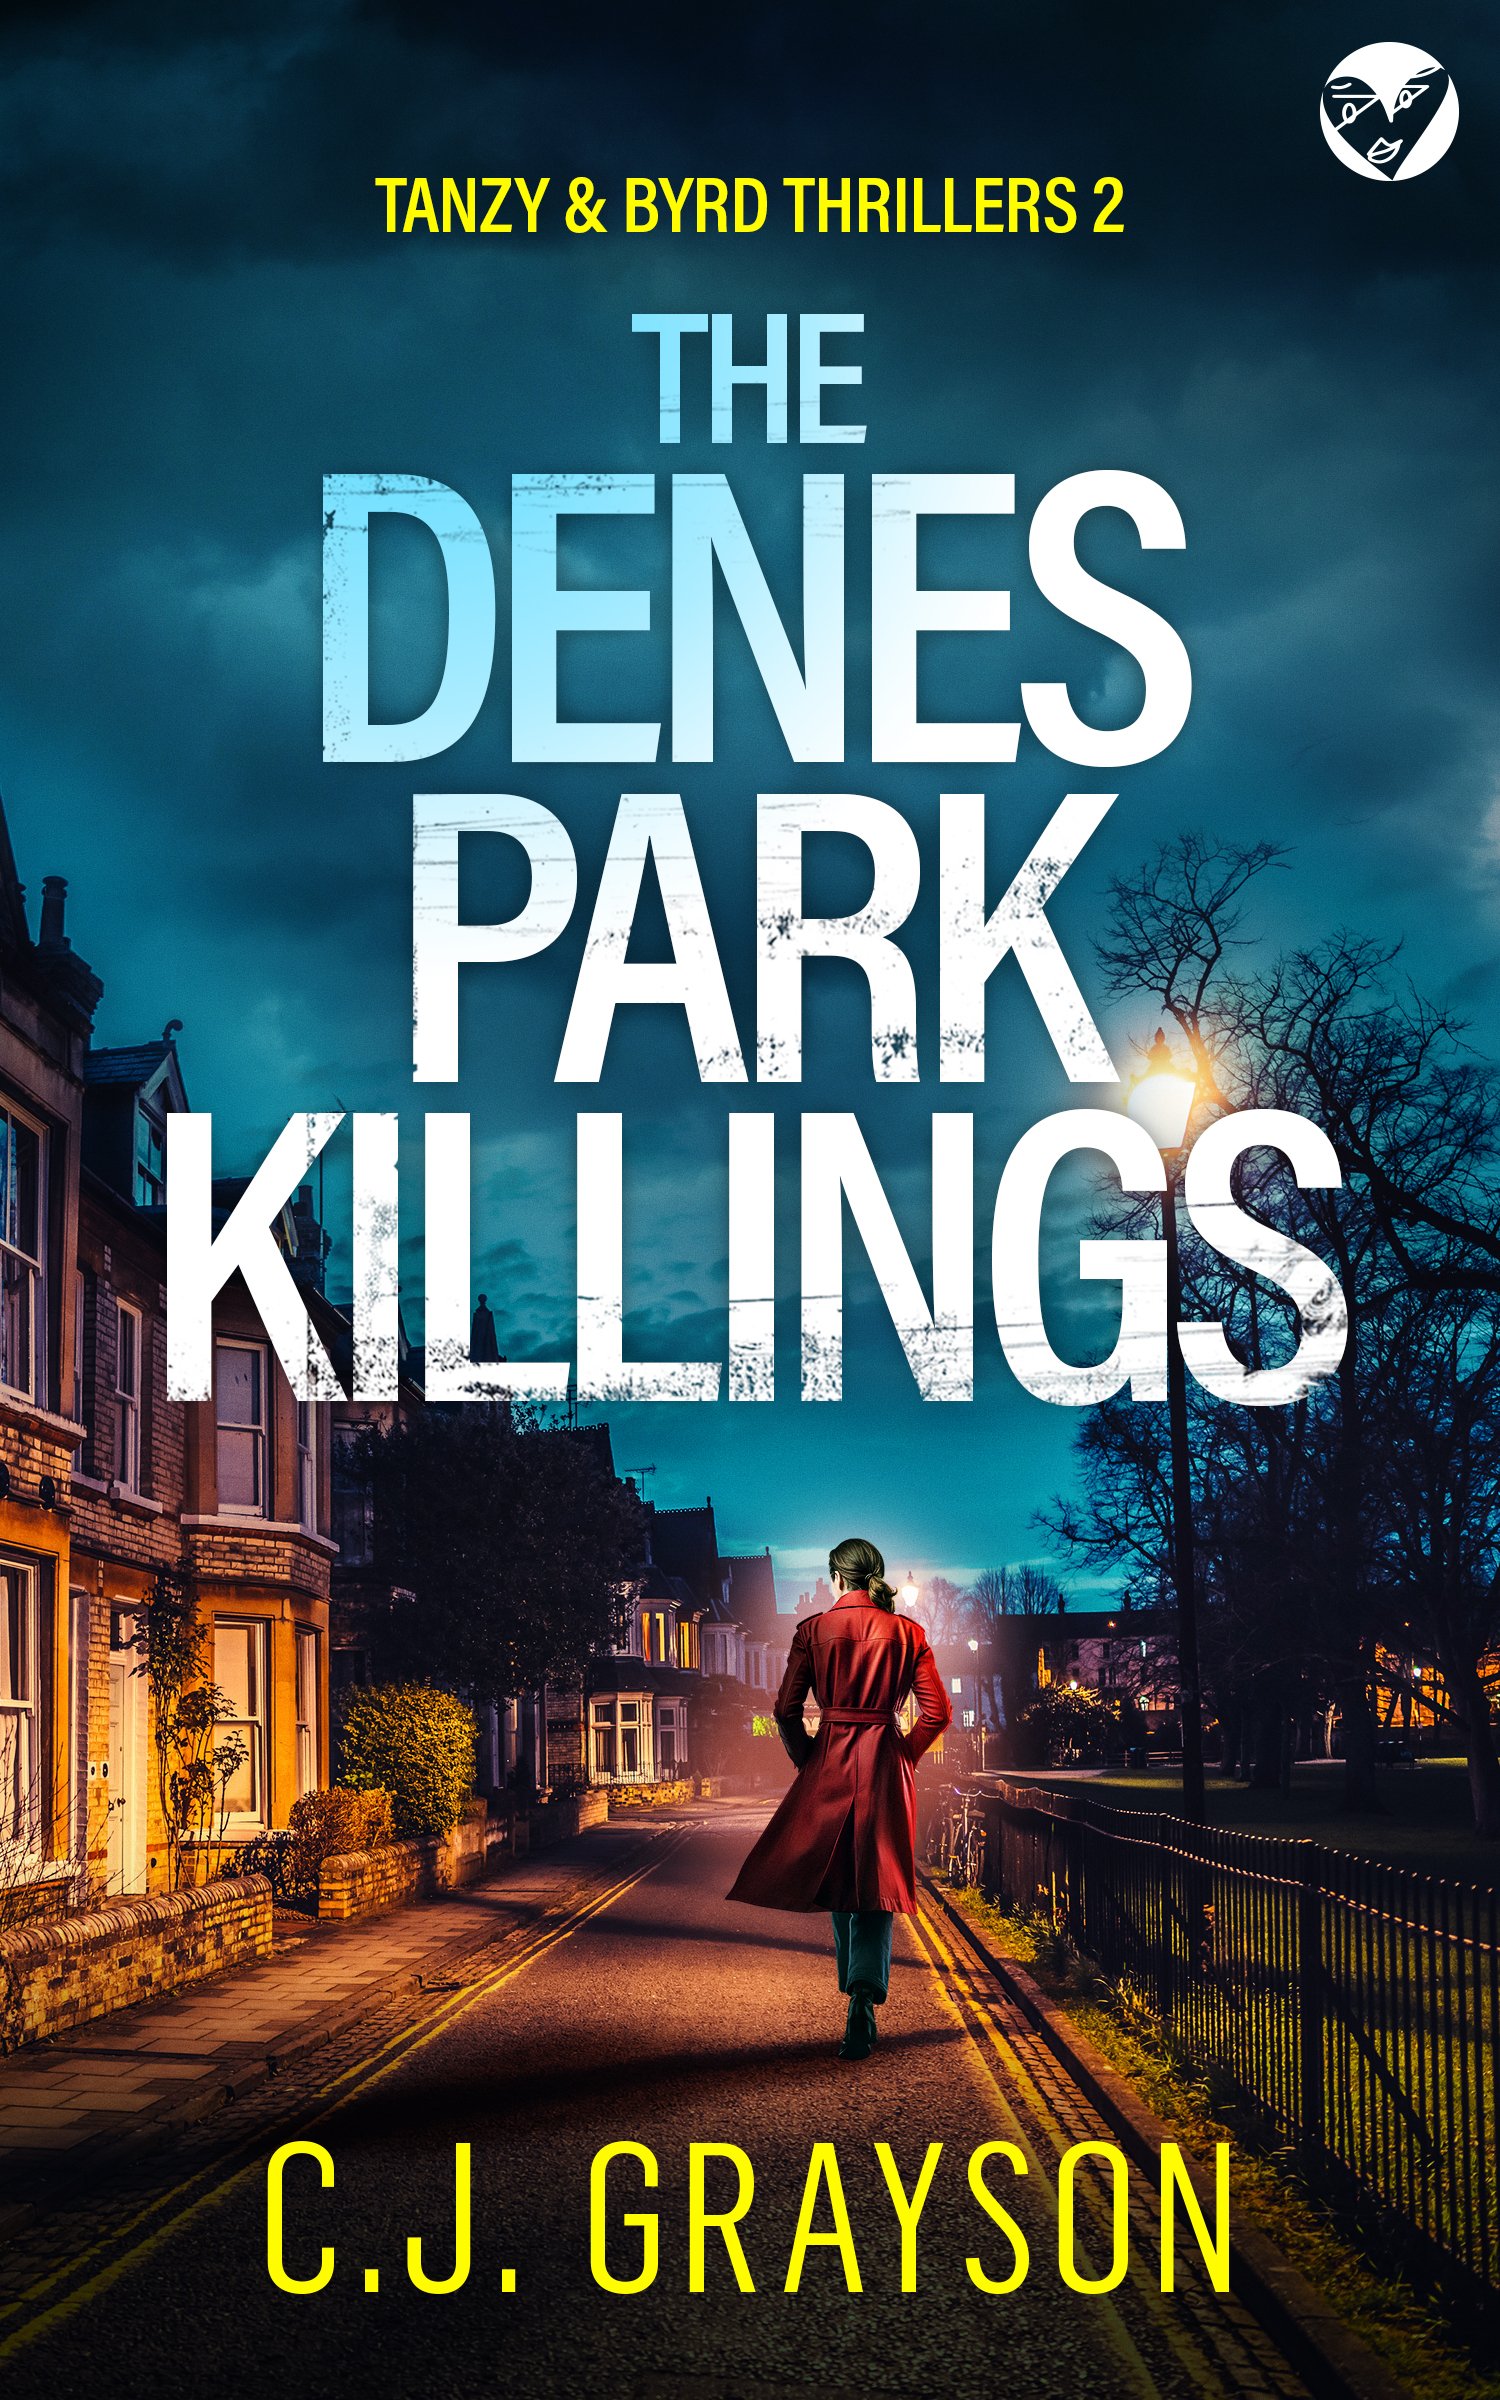 THE DENES PARK KILLINGS cover publish.jpg